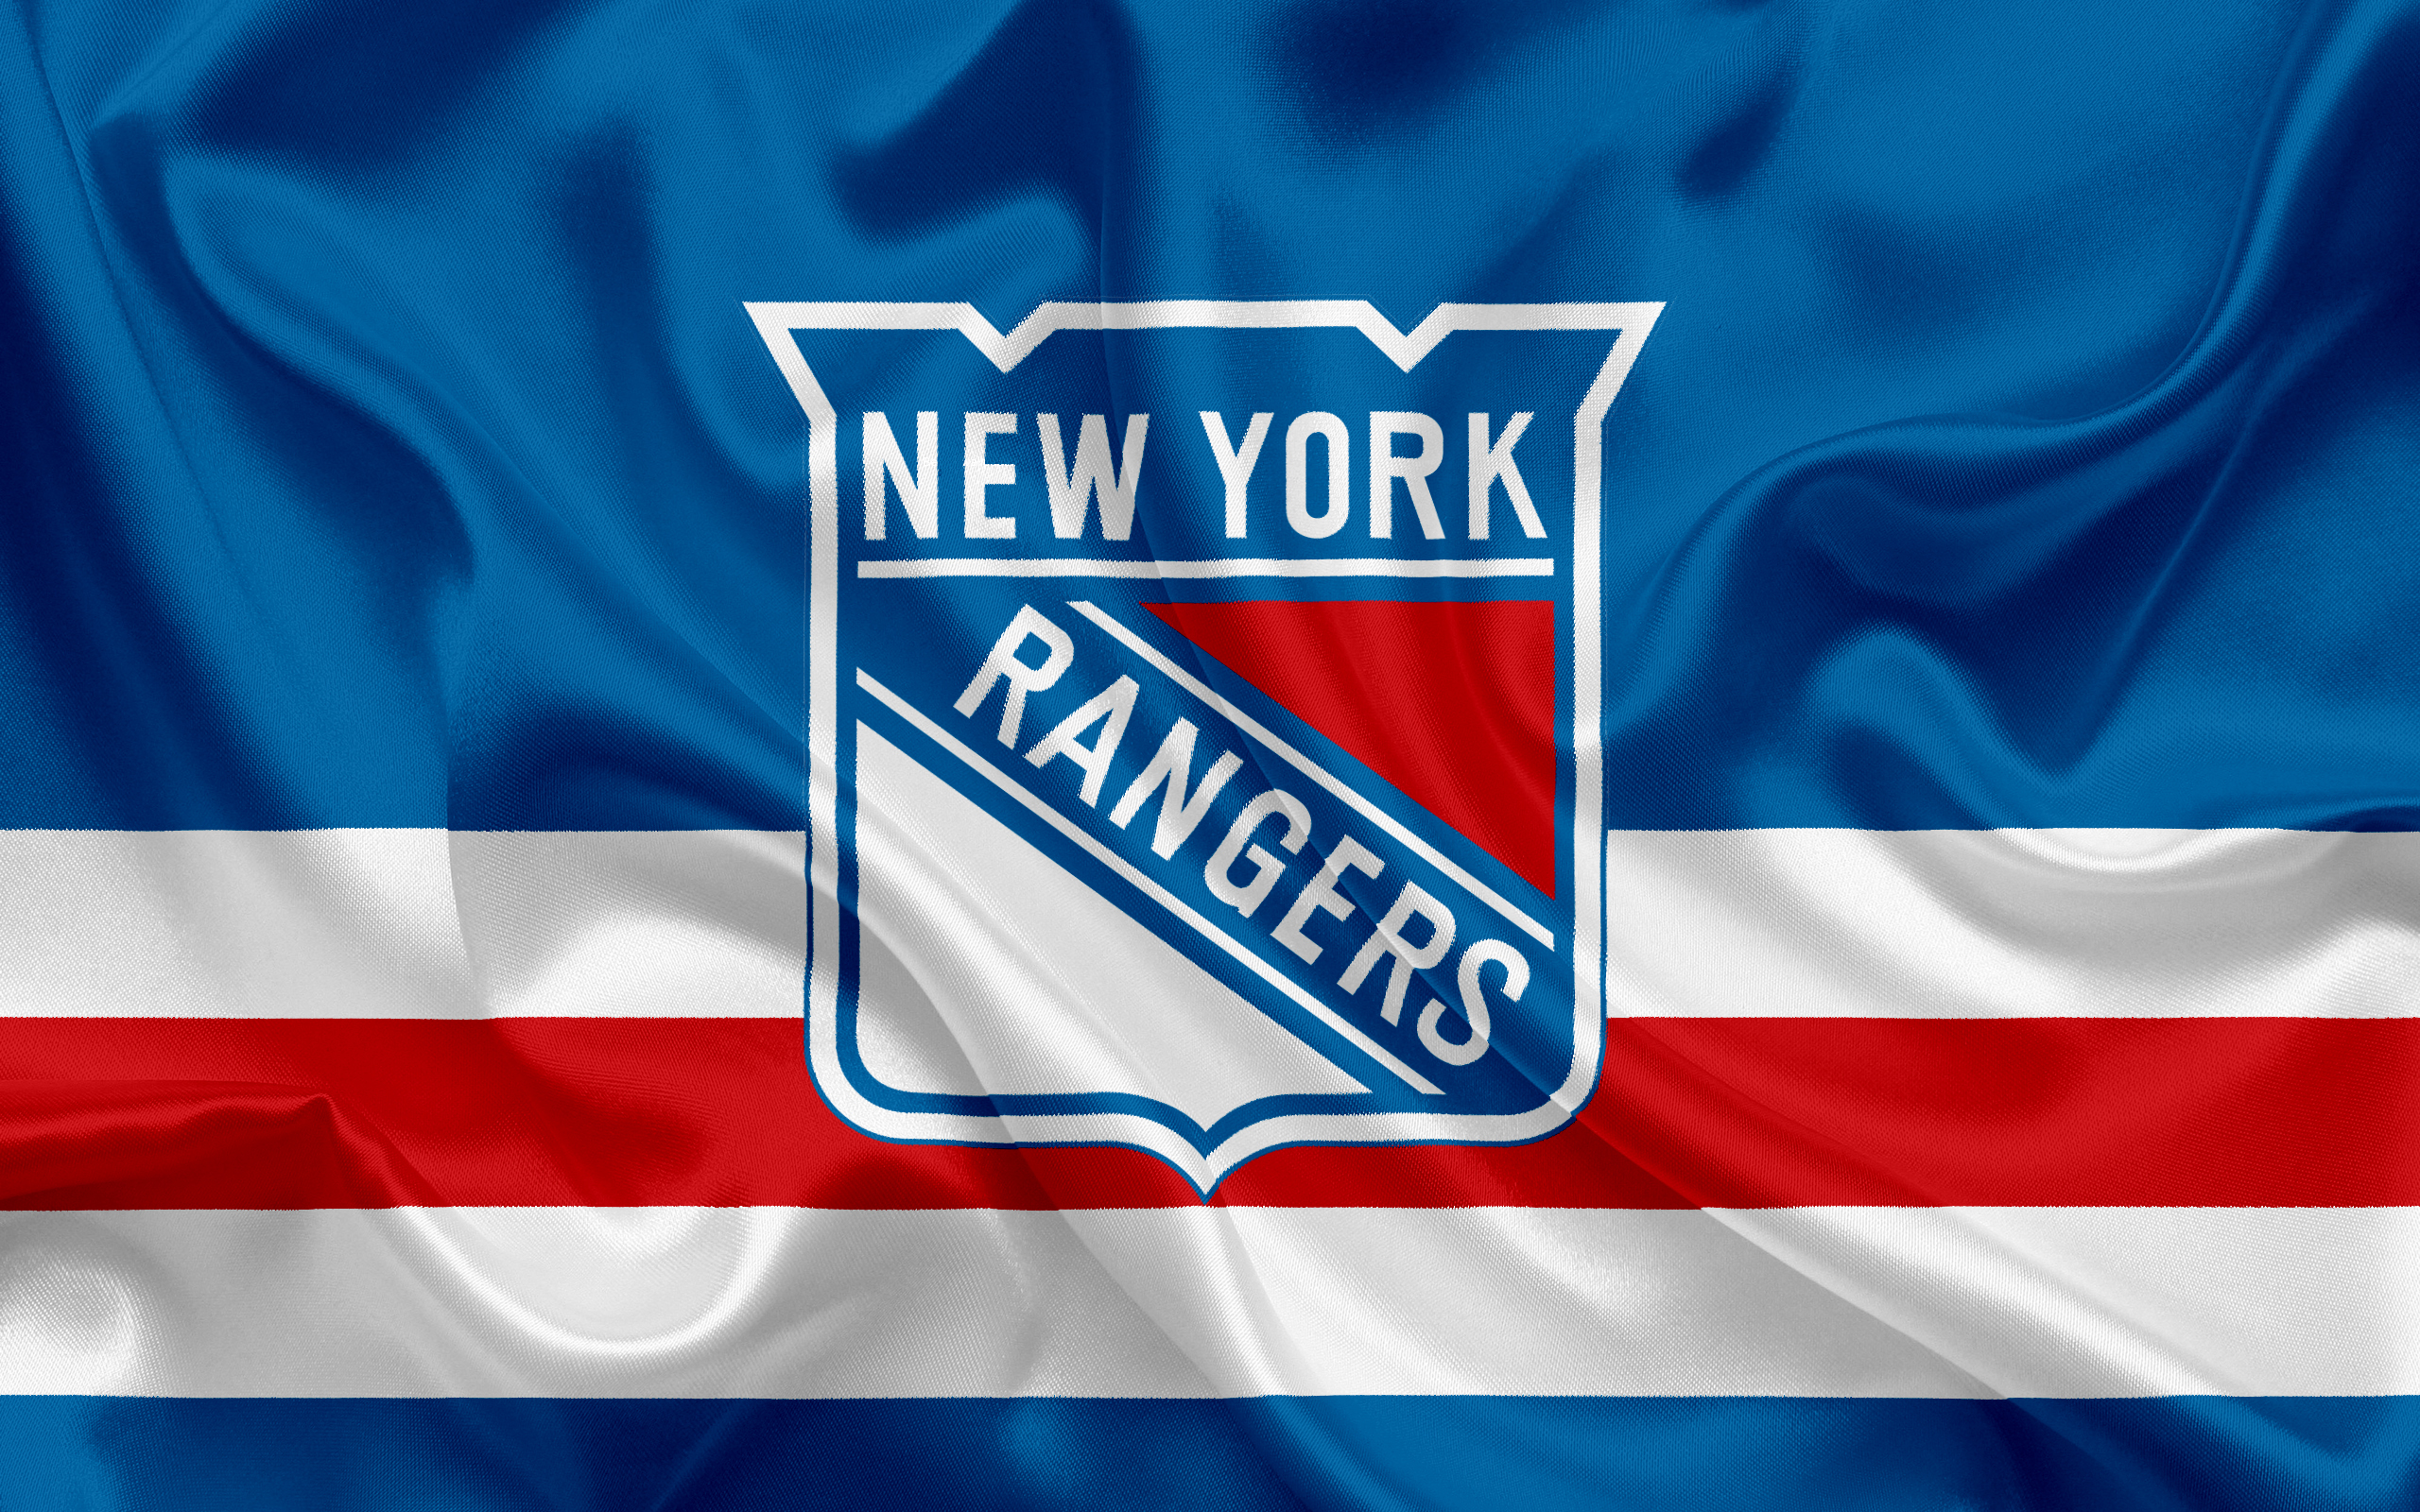 New York Rangers HD Wallpaper Background Image 2560x1600 ID